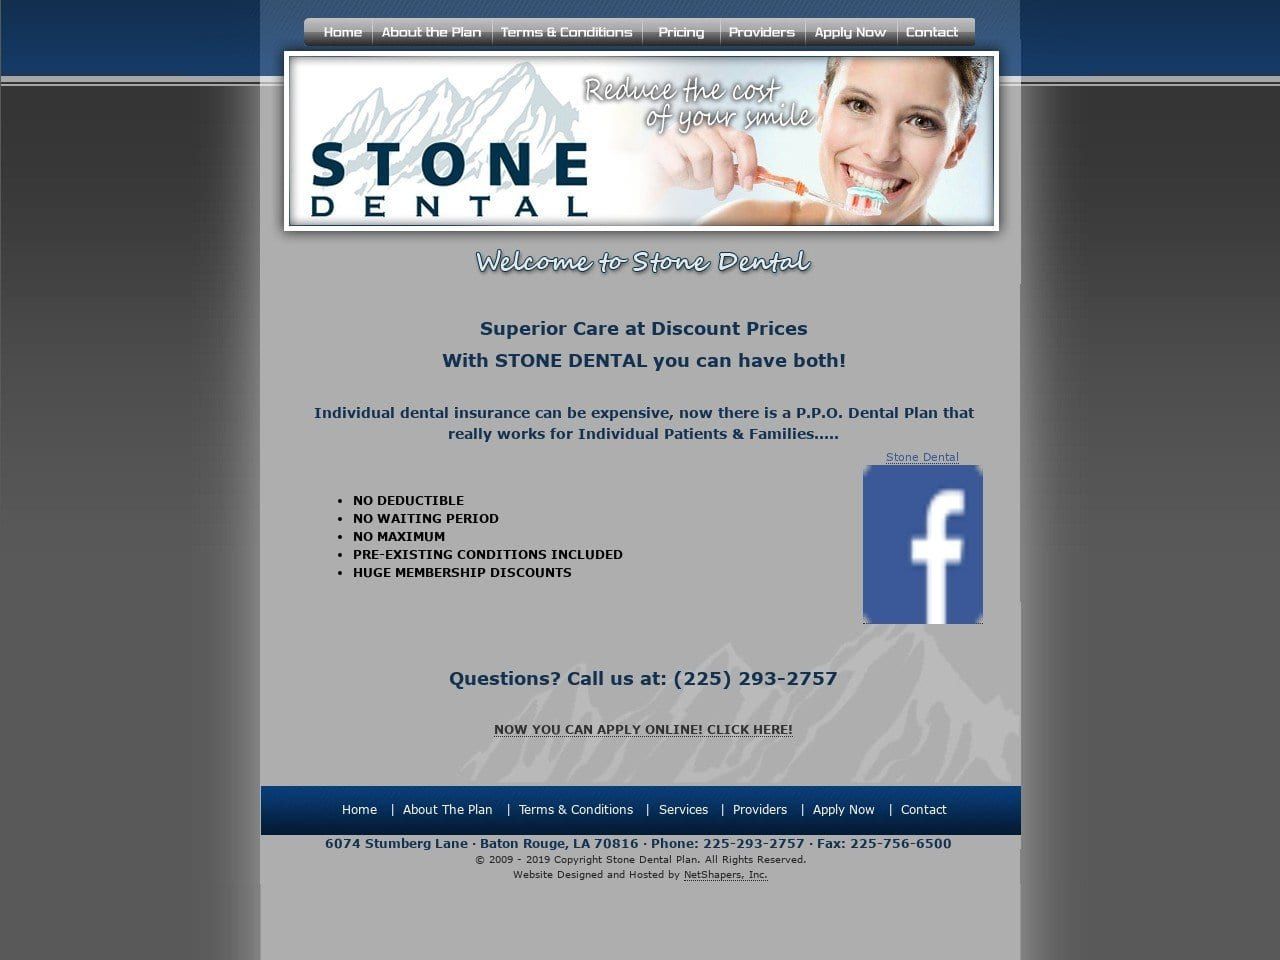 Stone Dental Website Screenshot from stonedentalplan.com